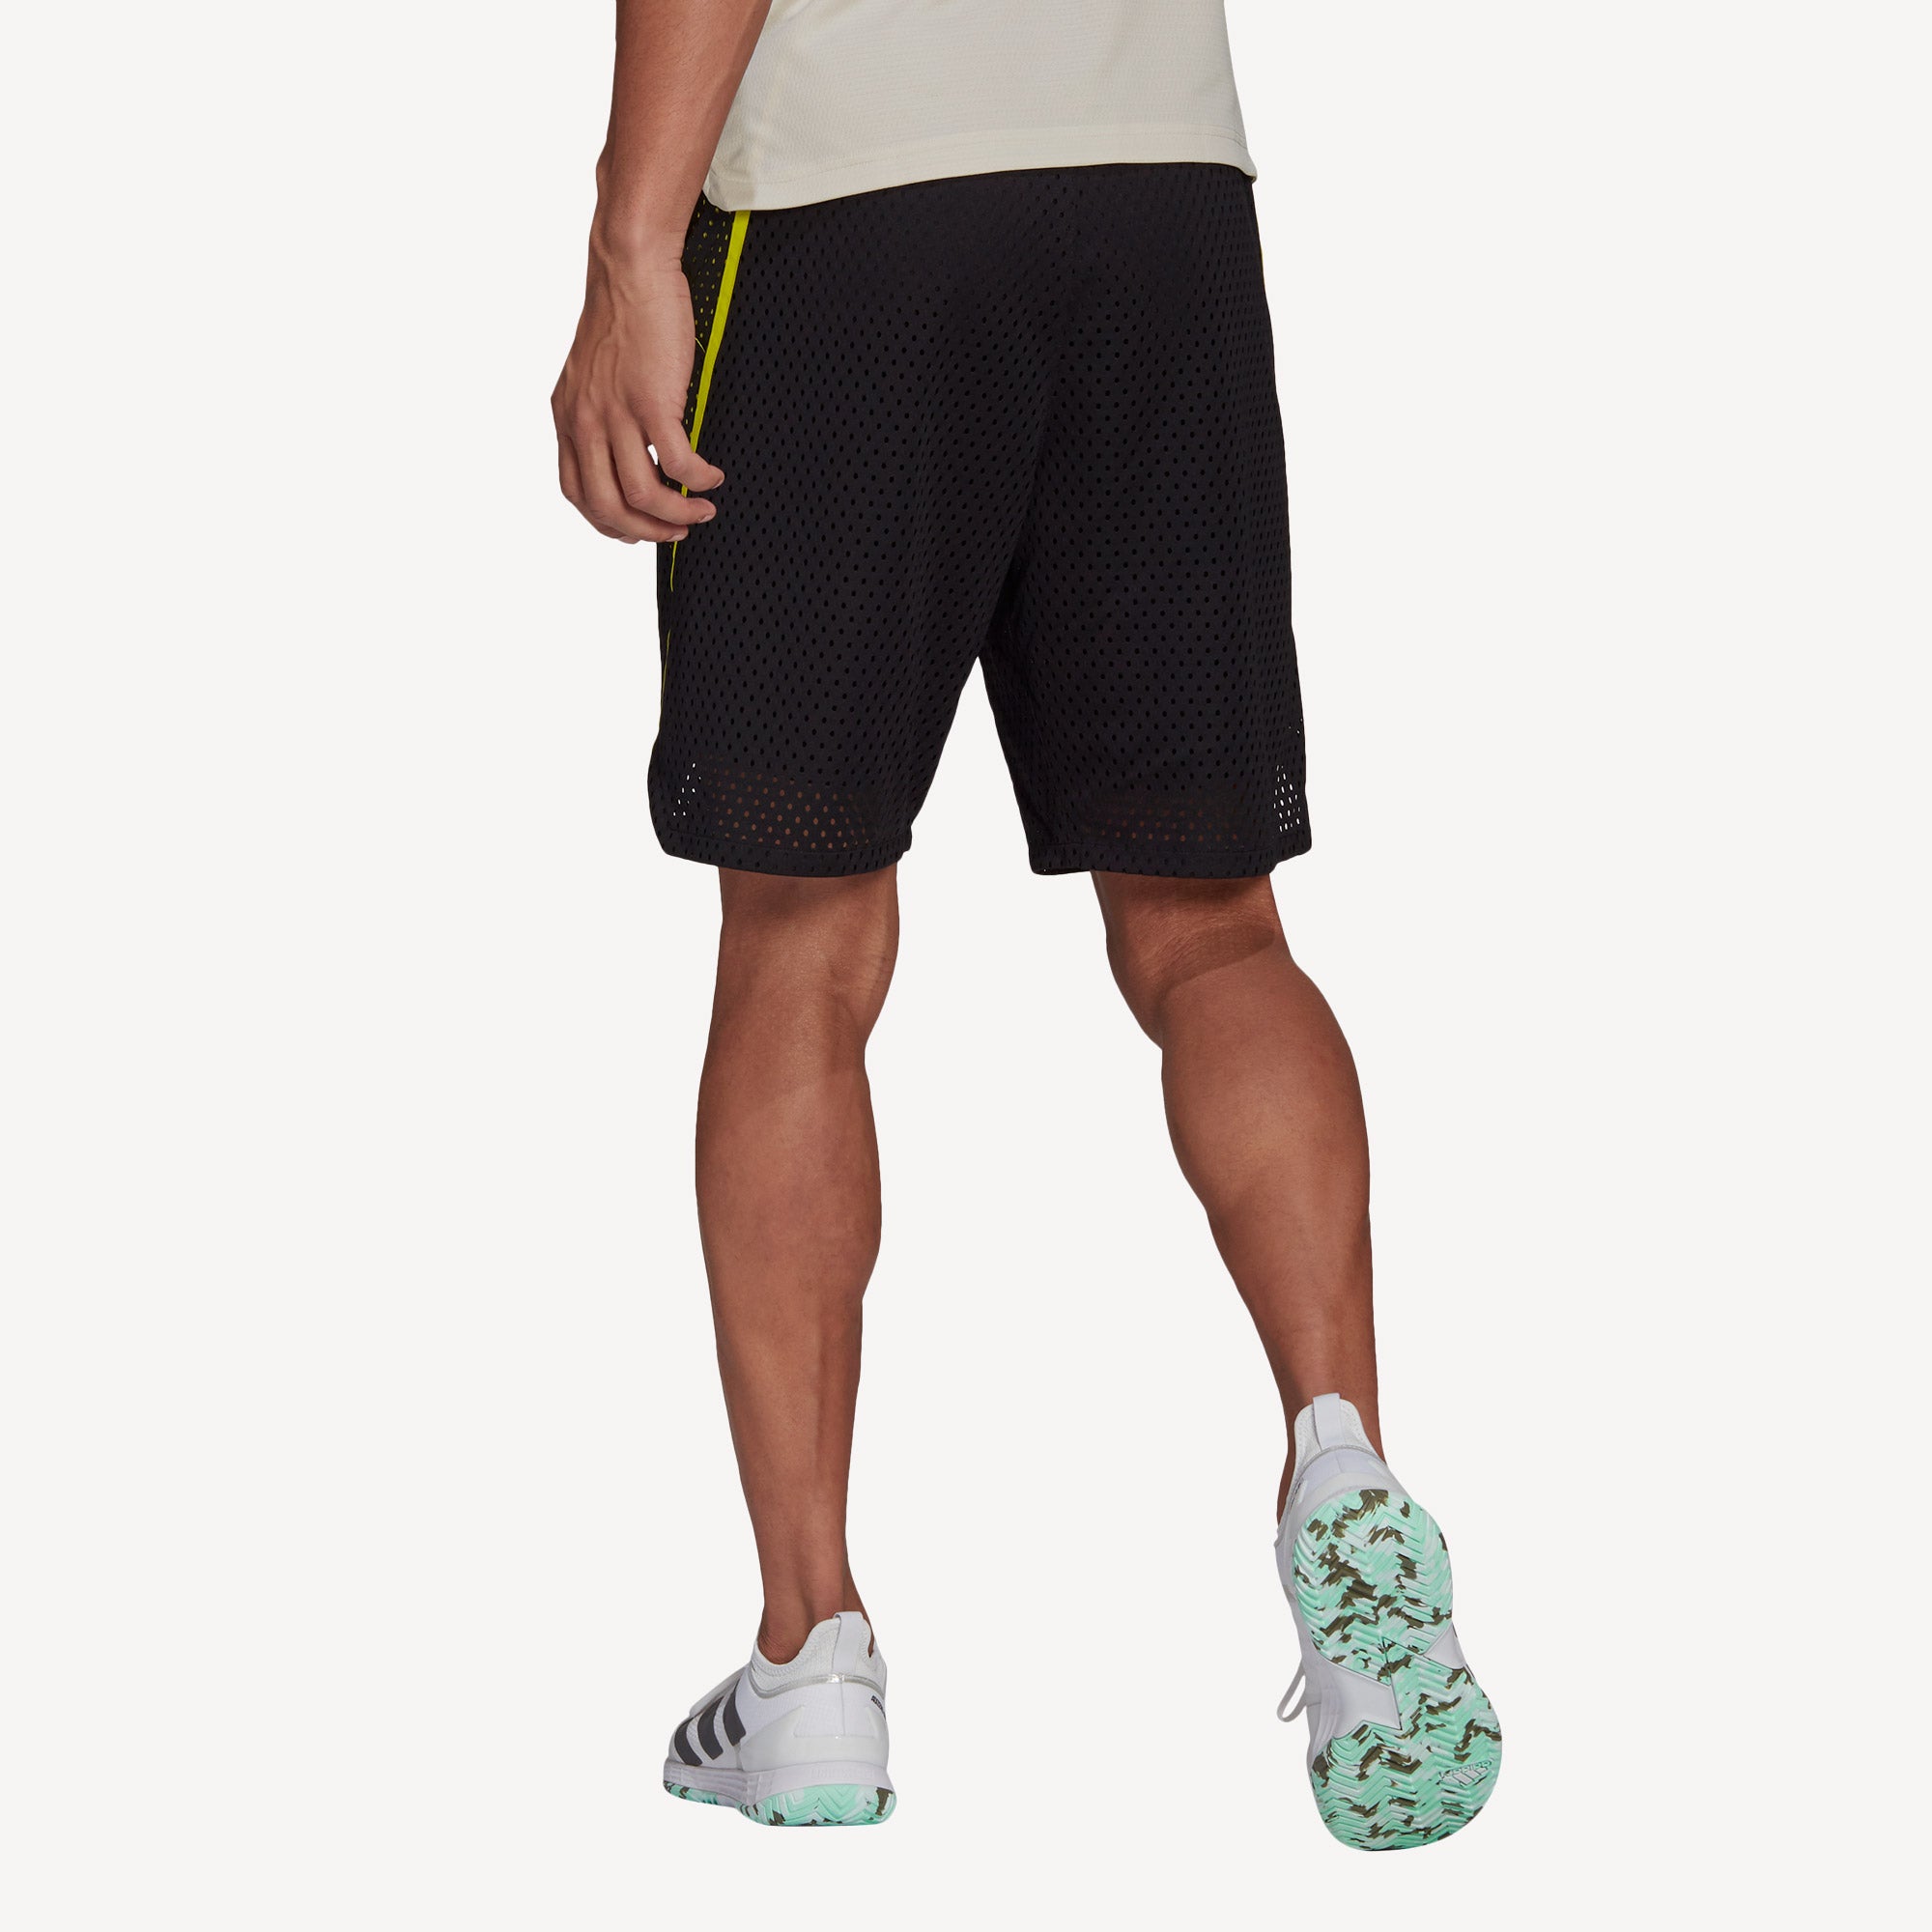 adidas Primeblue Heat Ready Men's 2IN1 9-Inch Tennis Shorts Black (2)